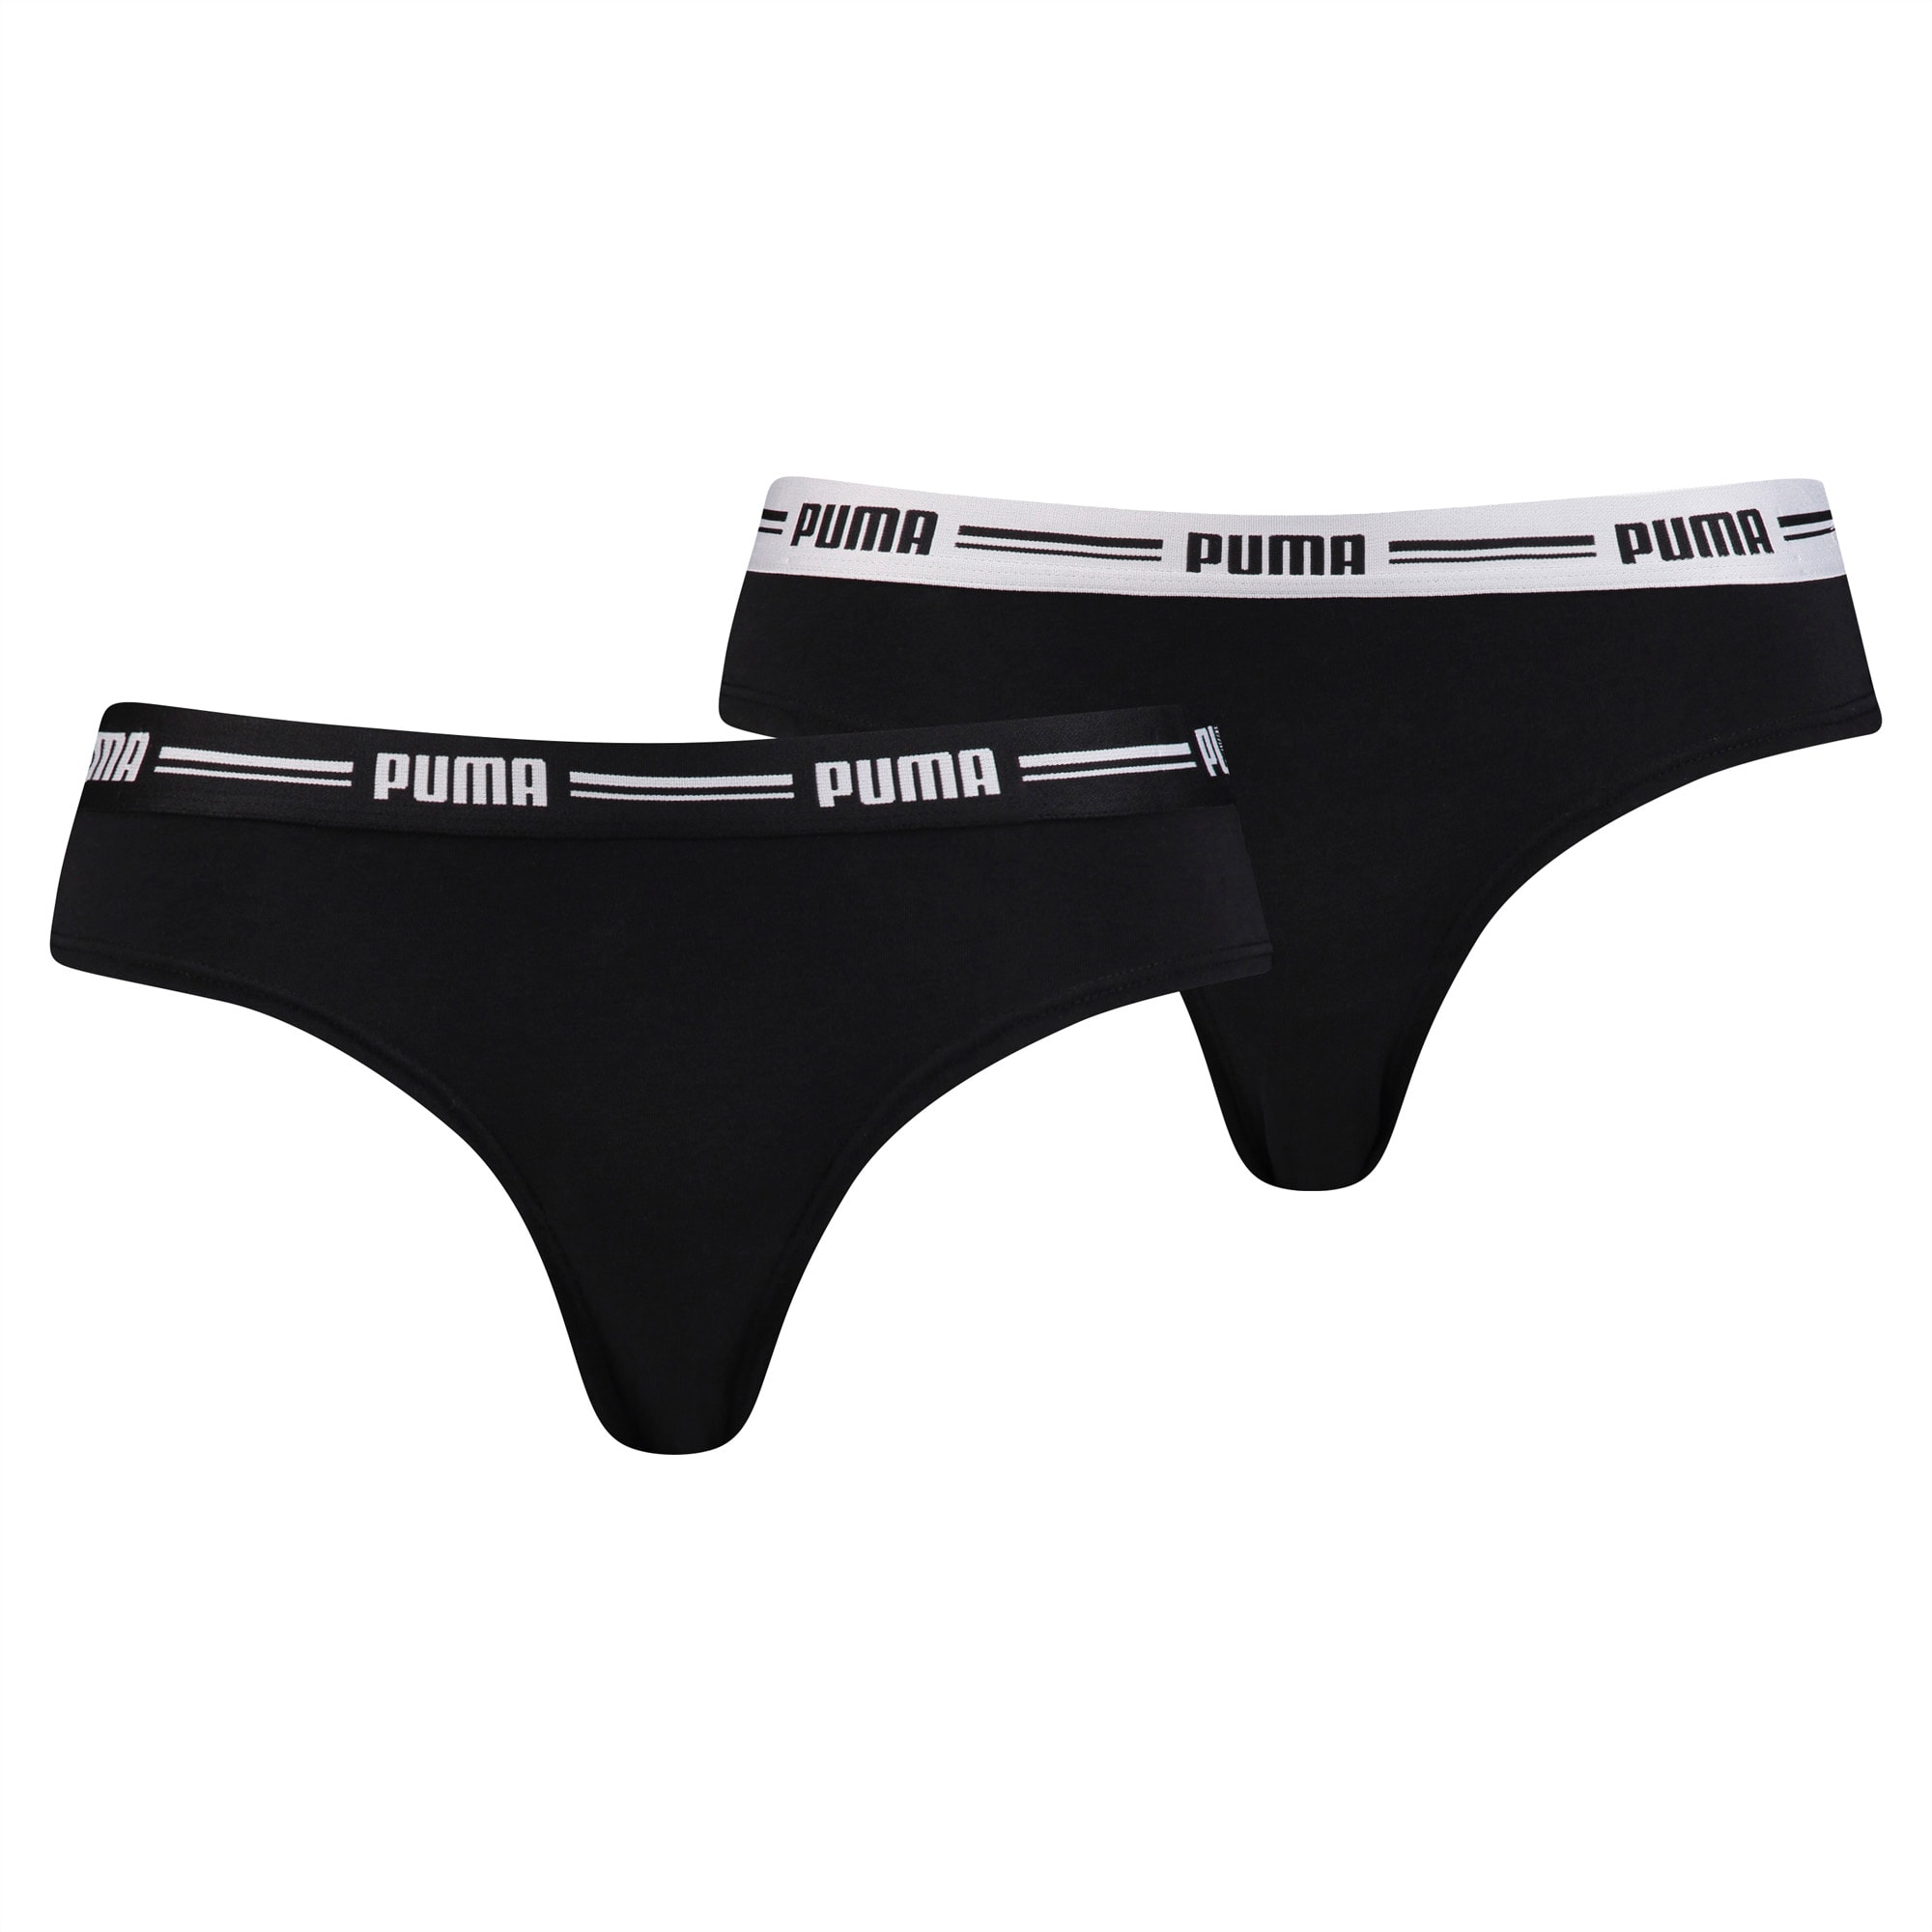 puma racing underwear